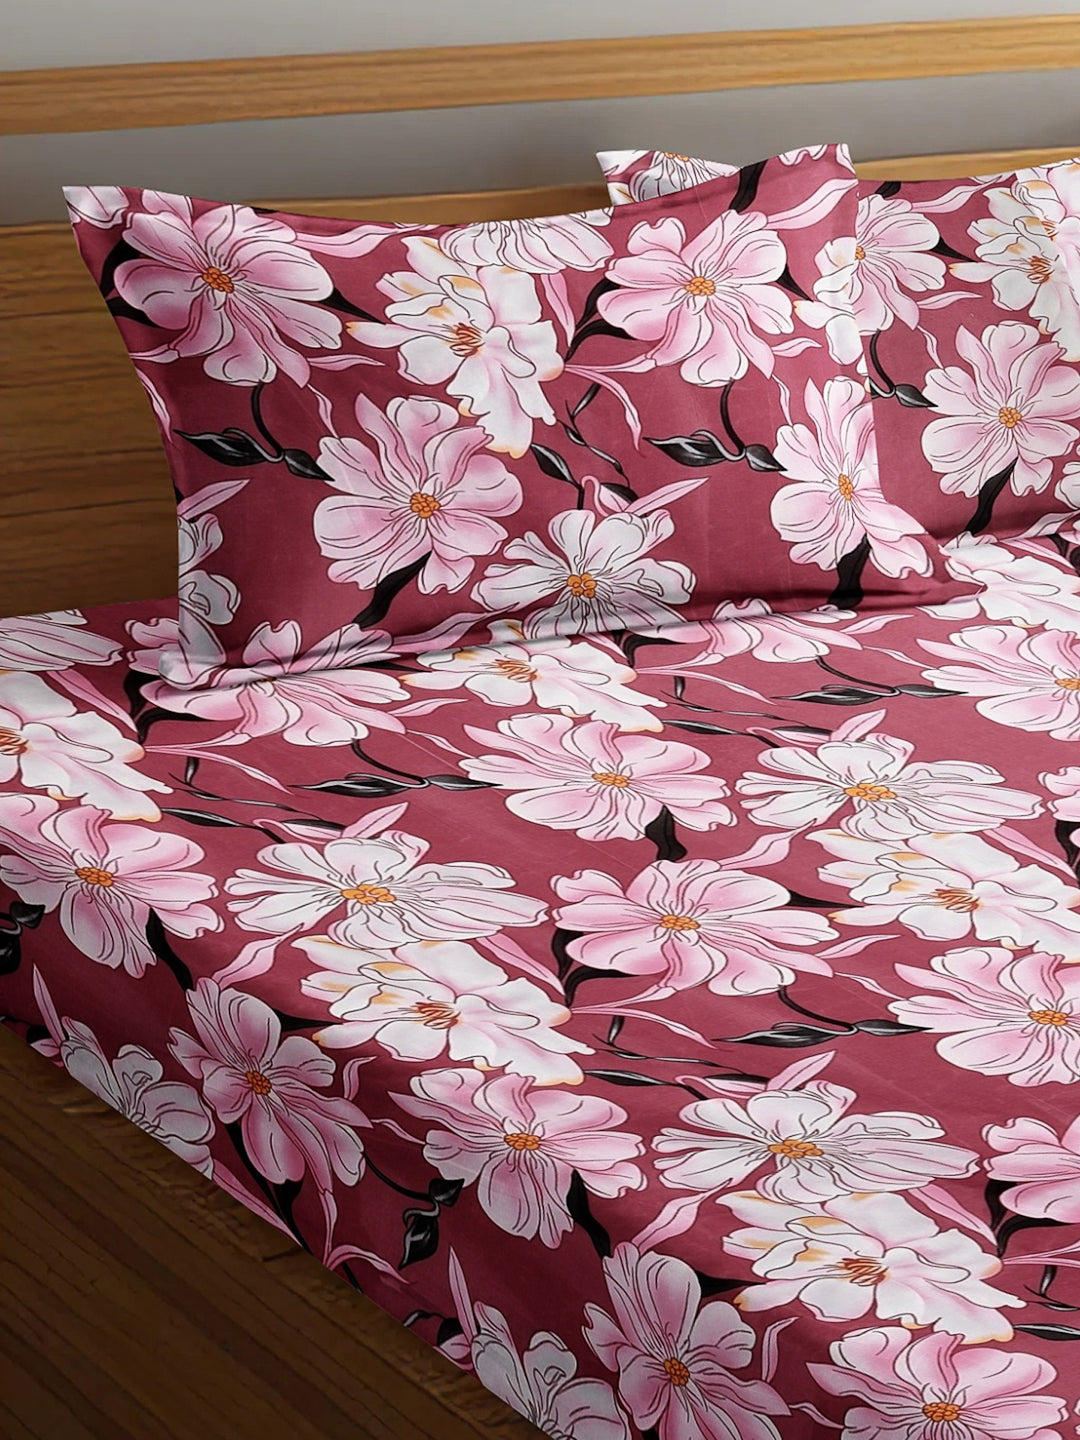 Arrabi Pink Floral TC Cotton Blend Super King Size Bedsheet with 2 Pillow Covers (270 x 260 cm)